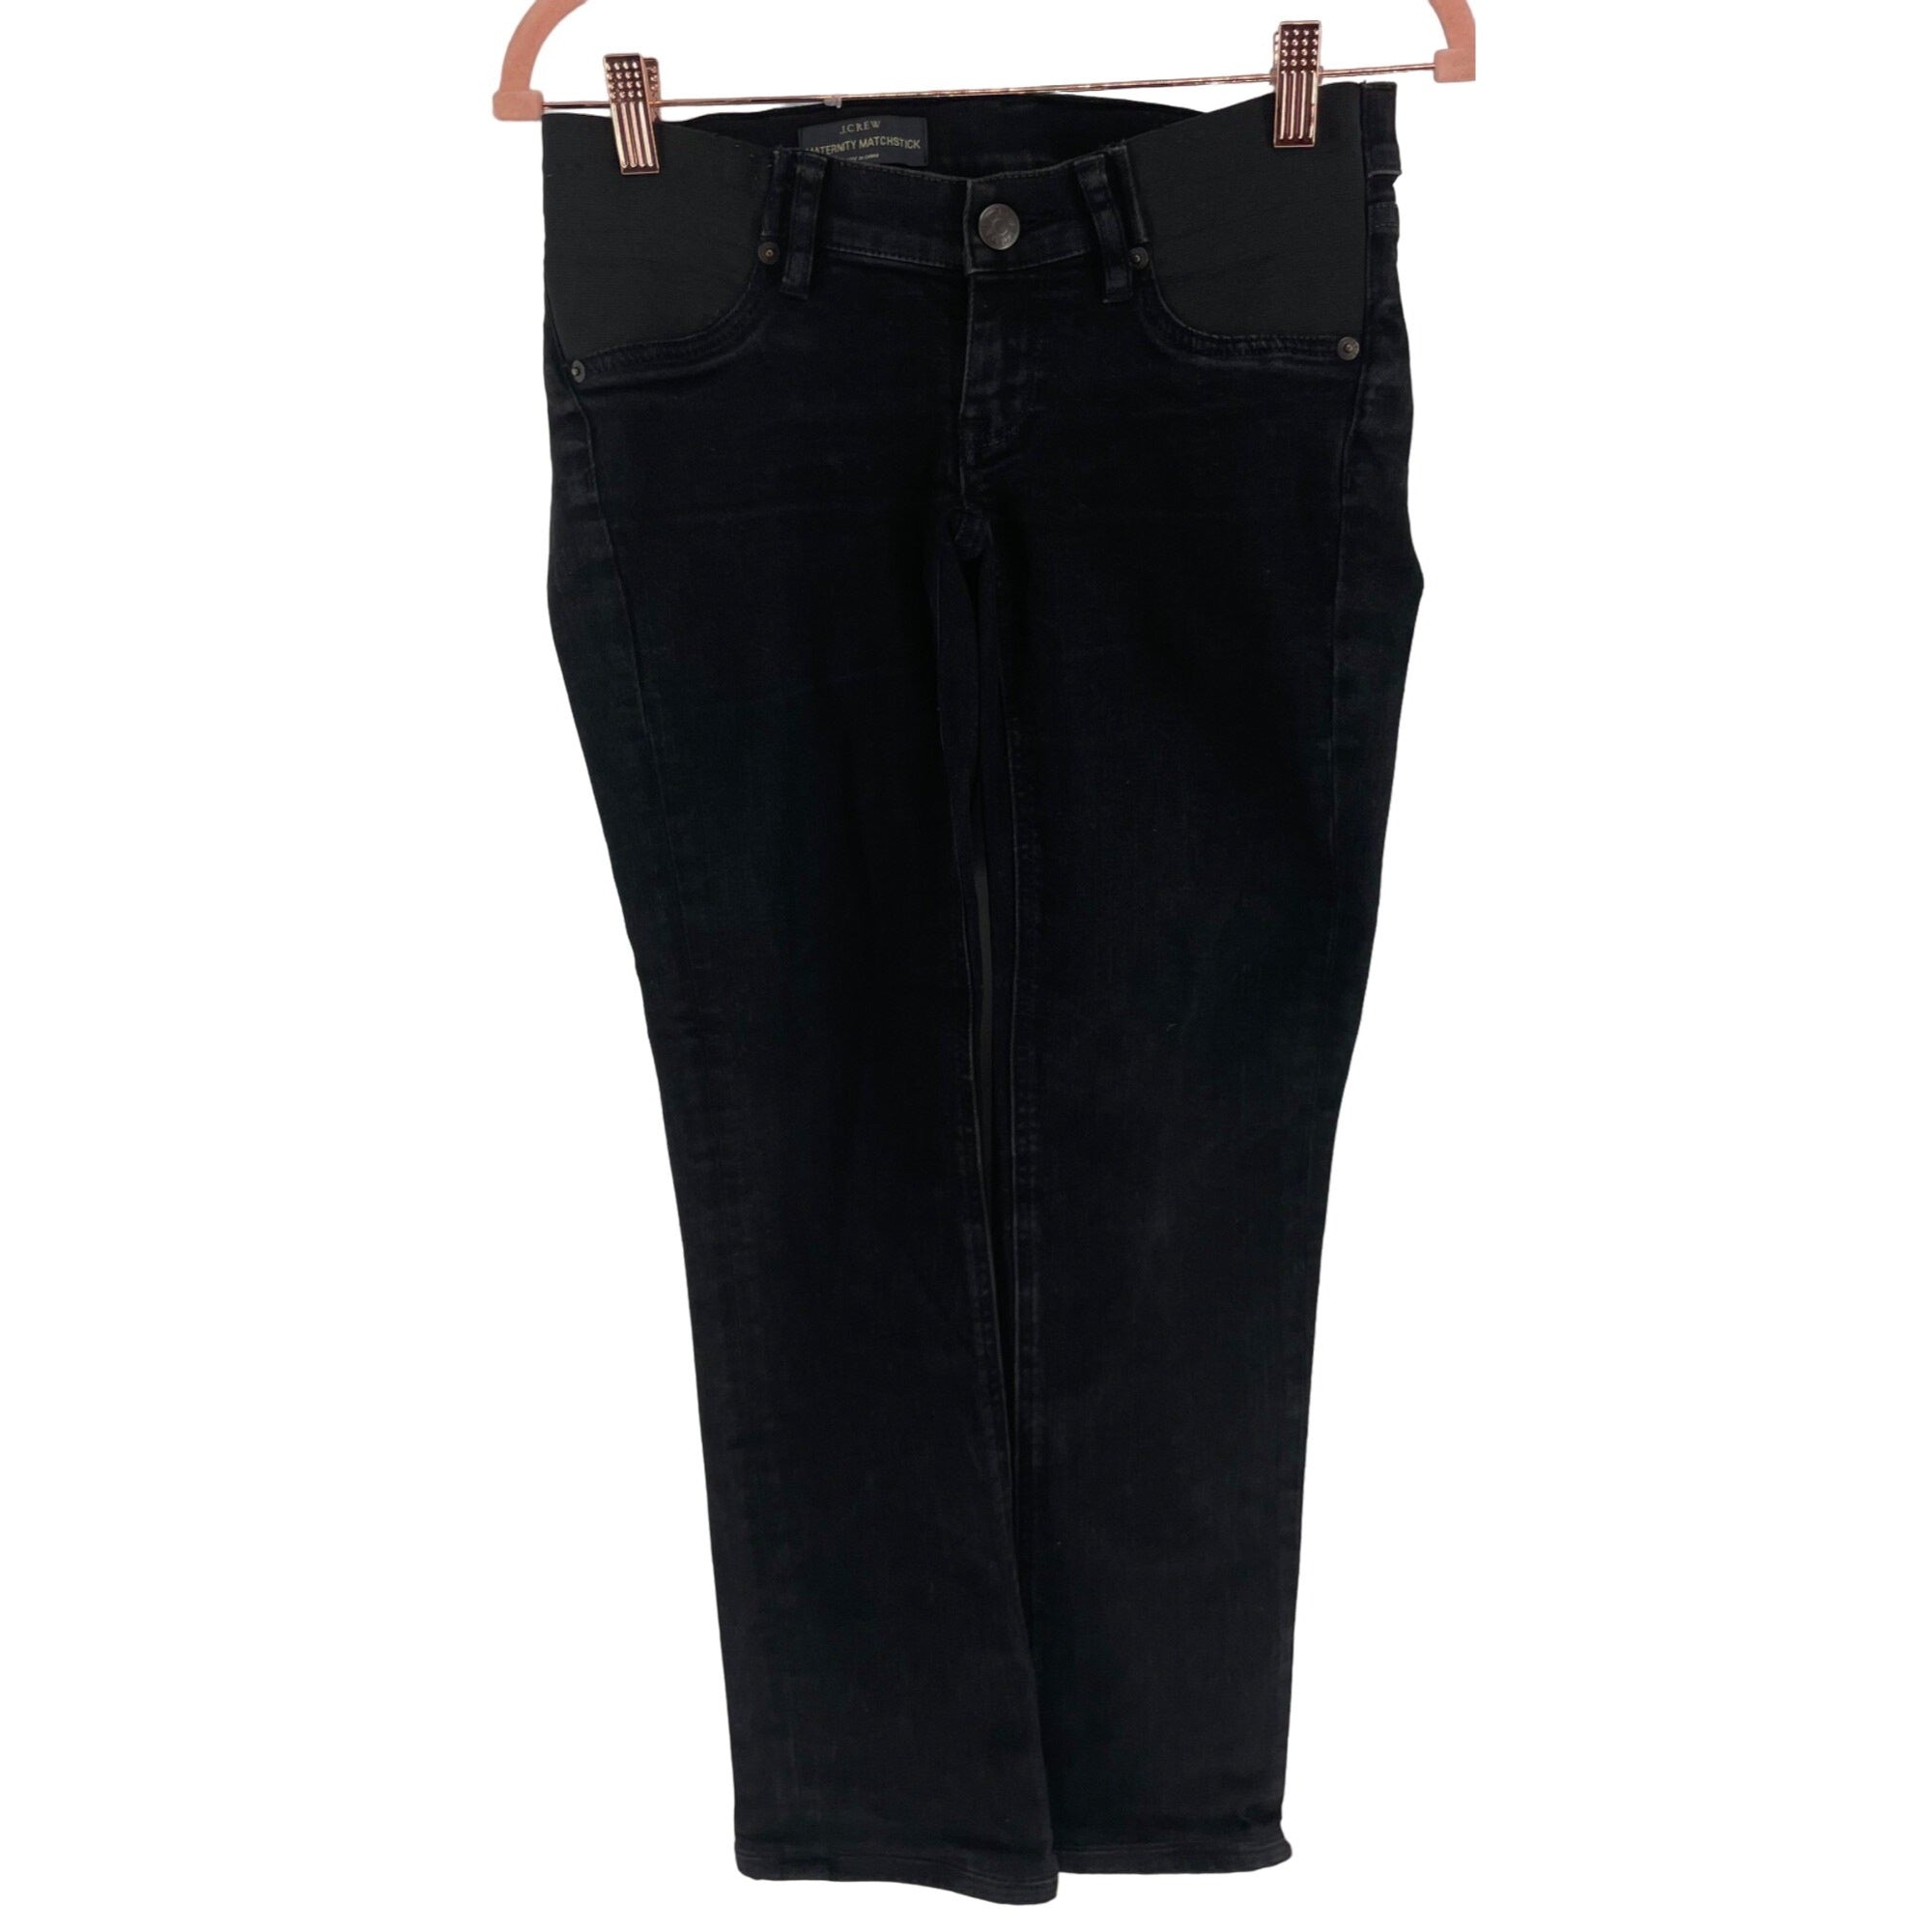 J. Crew Women's Size 26 Maternity Matchstick Black Denim Flare Jeans